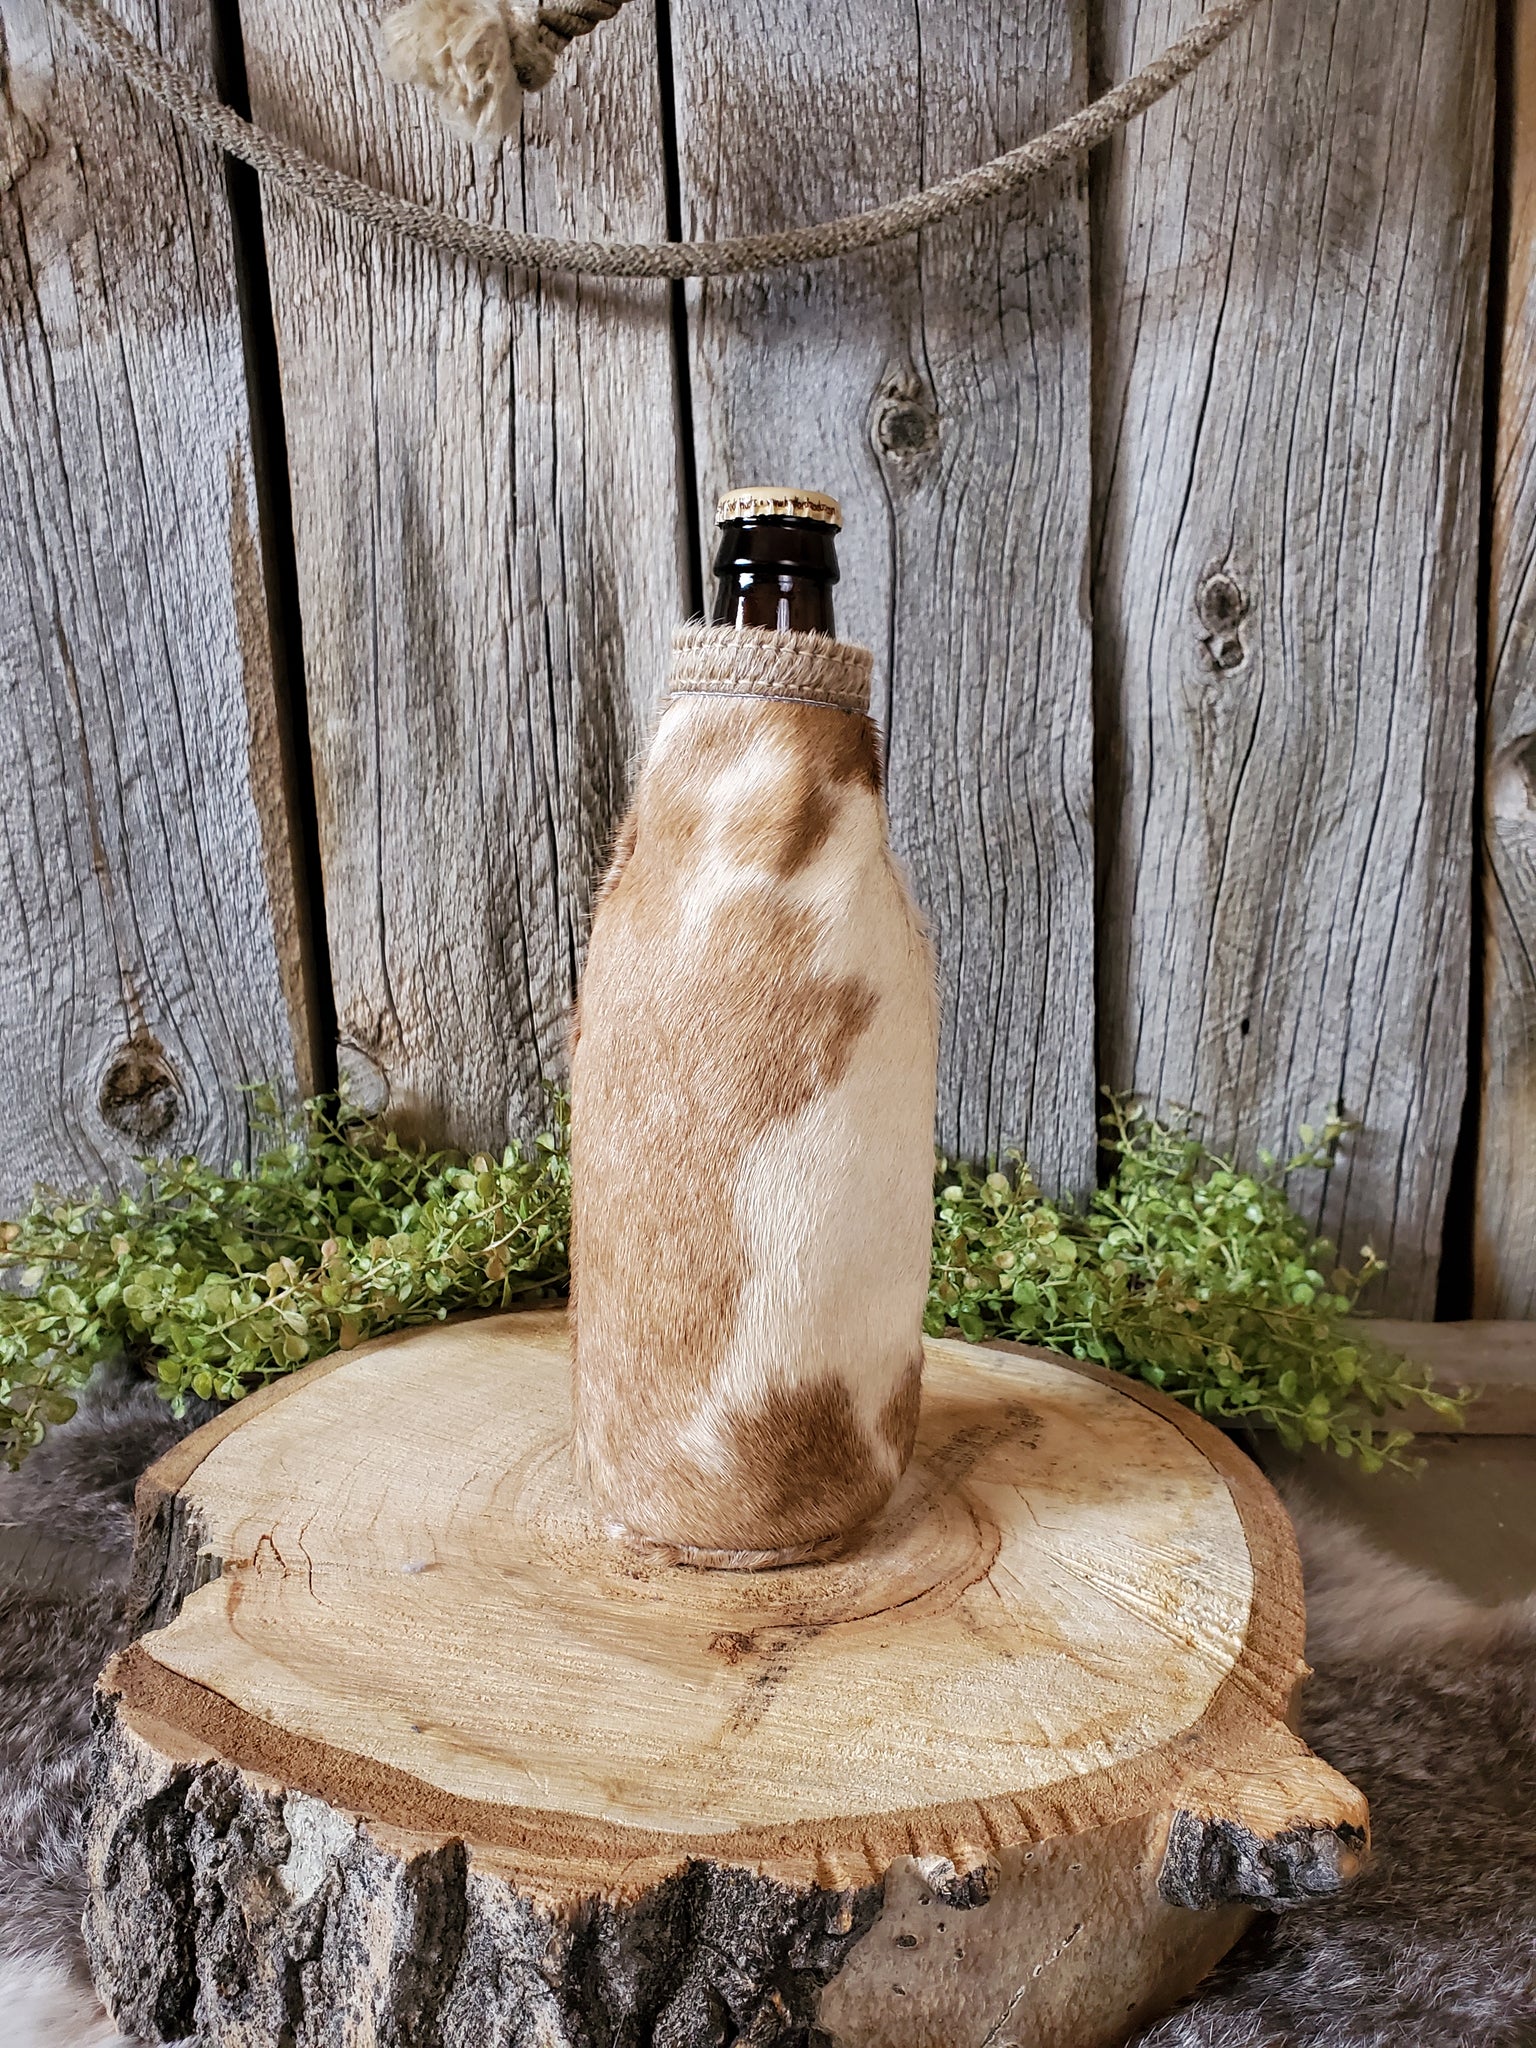 Canvas Beer Bottle Koozies – Little Laramie Trading Company